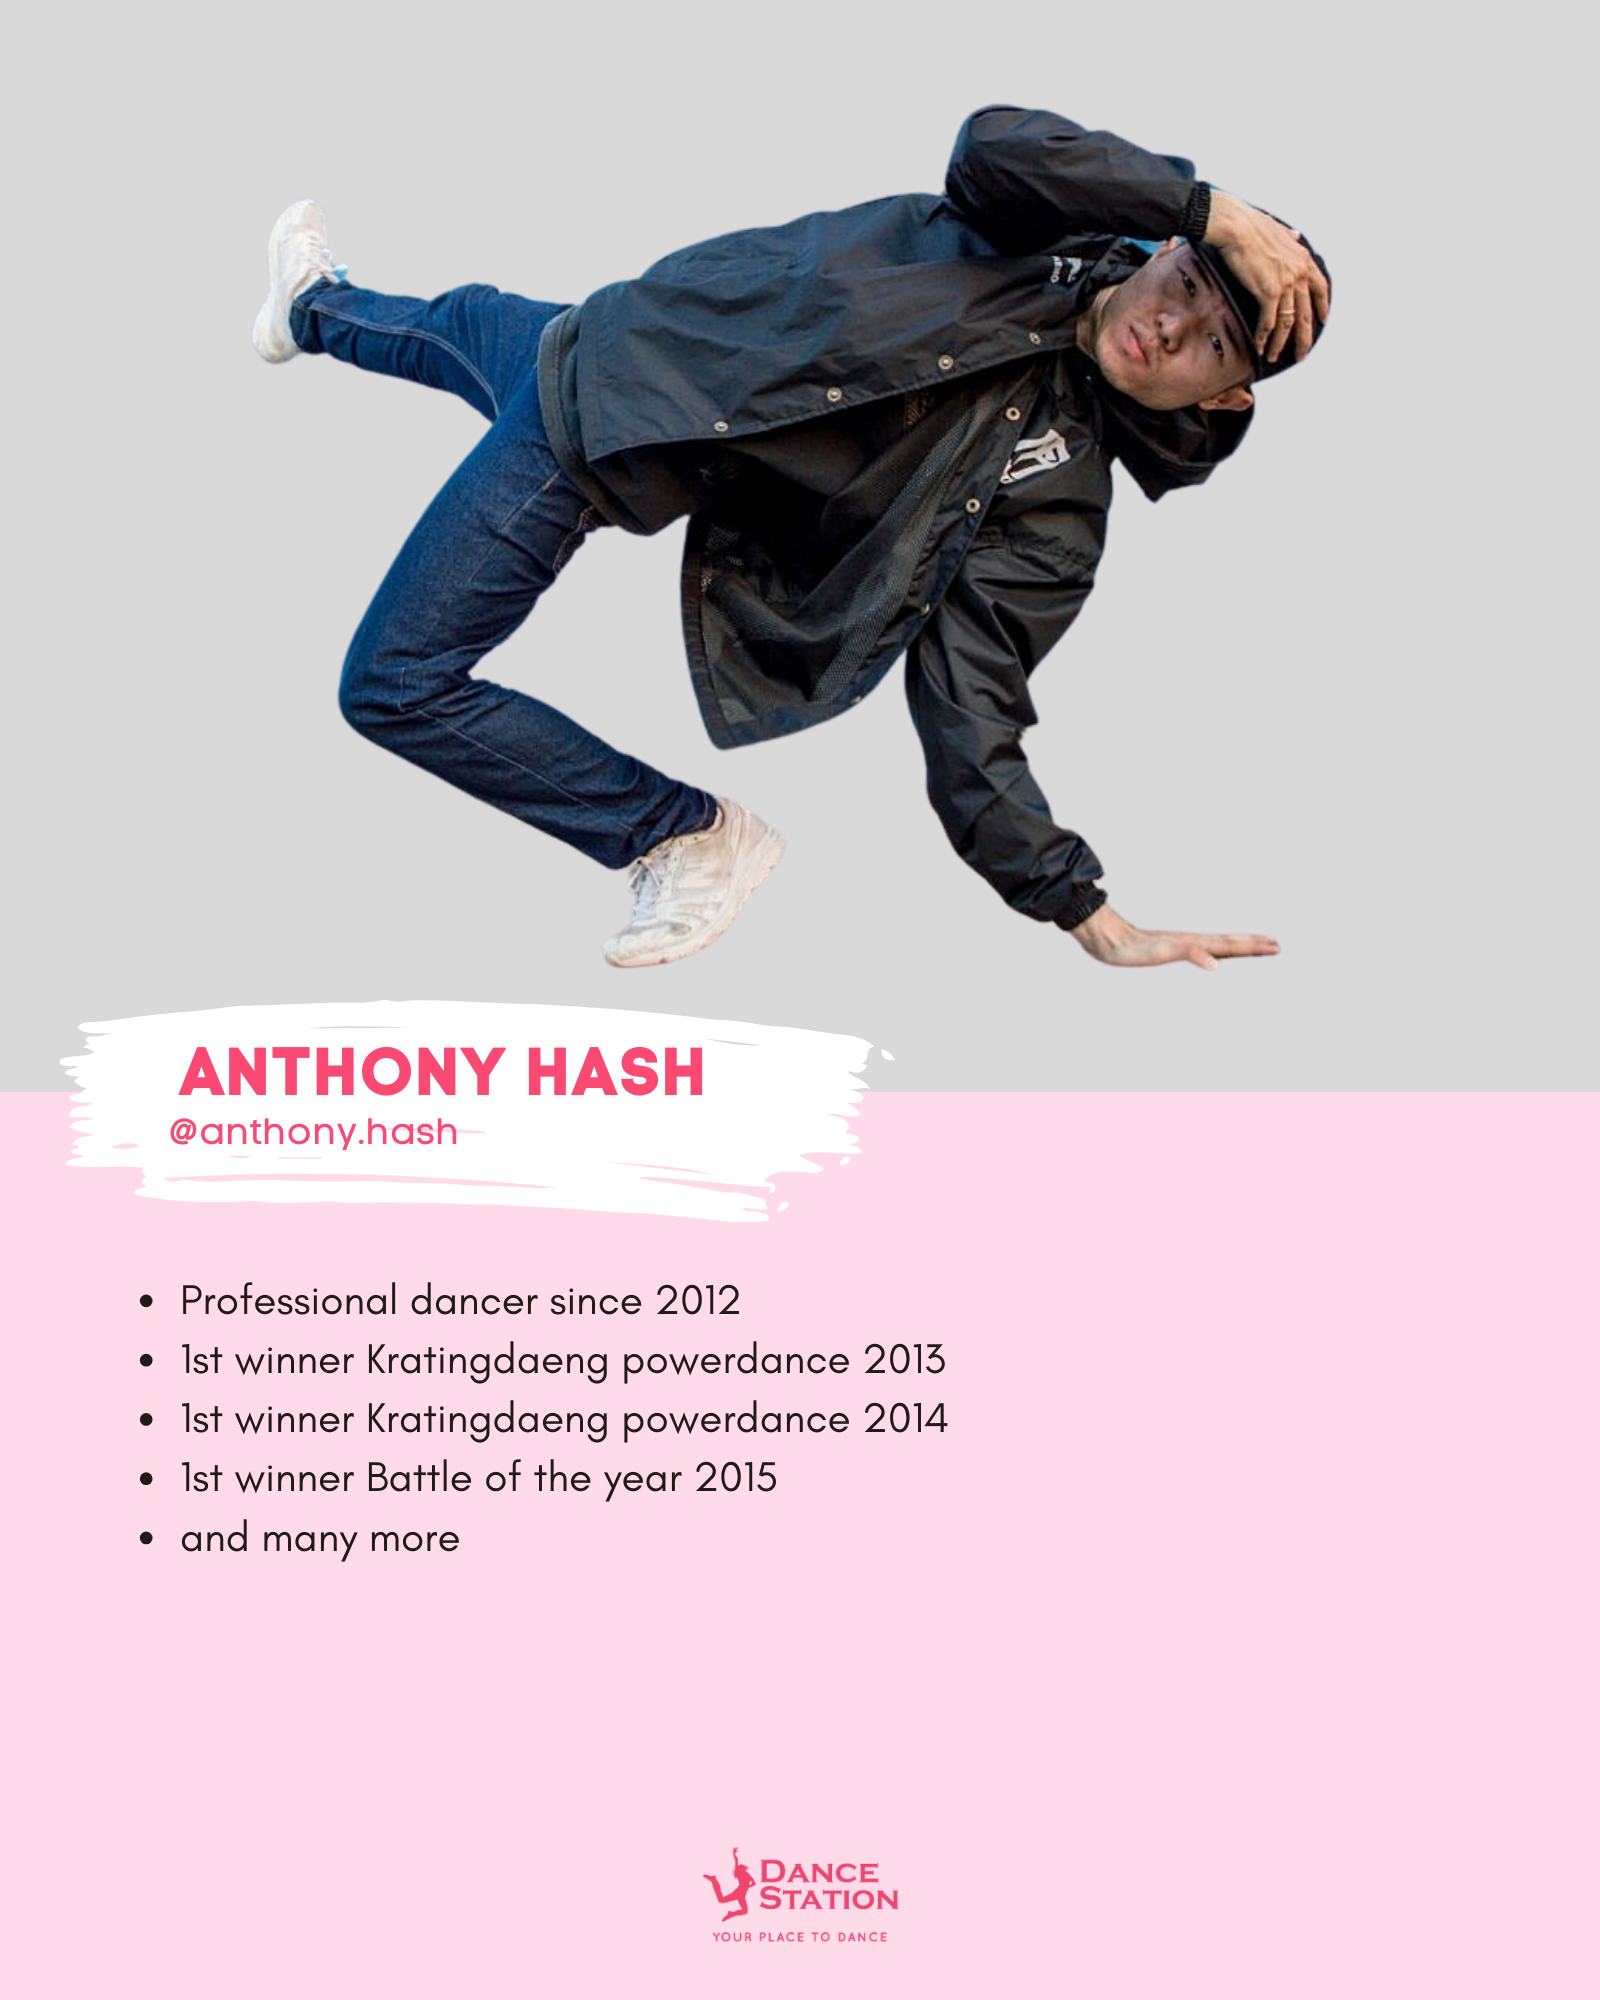 ANTHONY HASH (Mr.Hash)